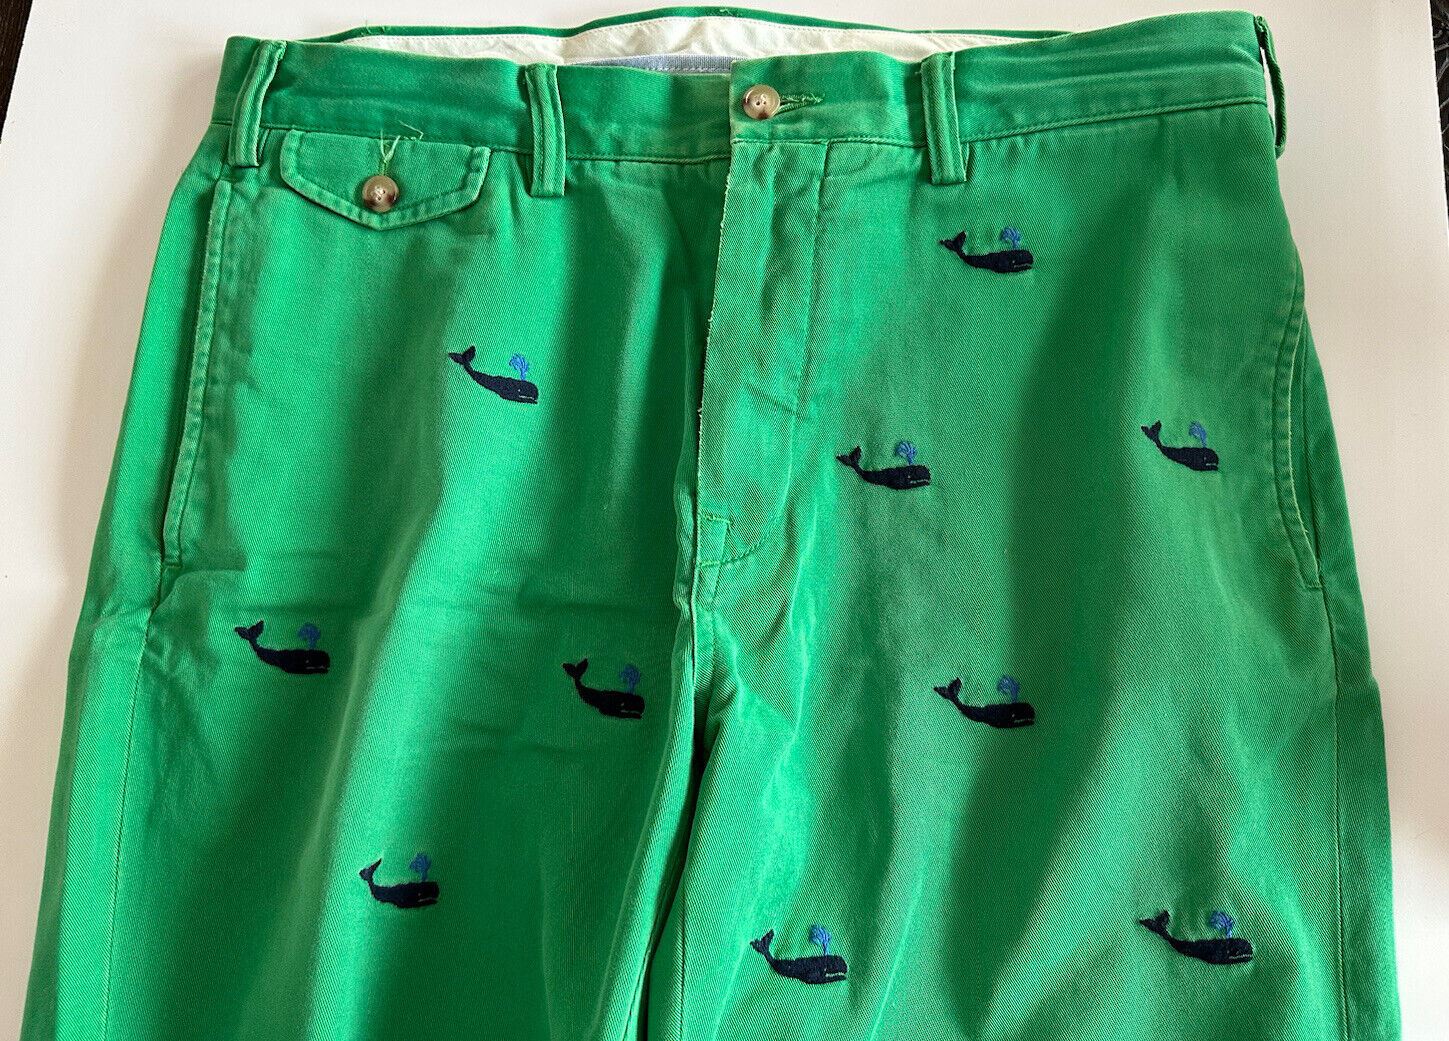 Polo Ralph Lauren Men's Classic Fit Green Shorts Size 33 US